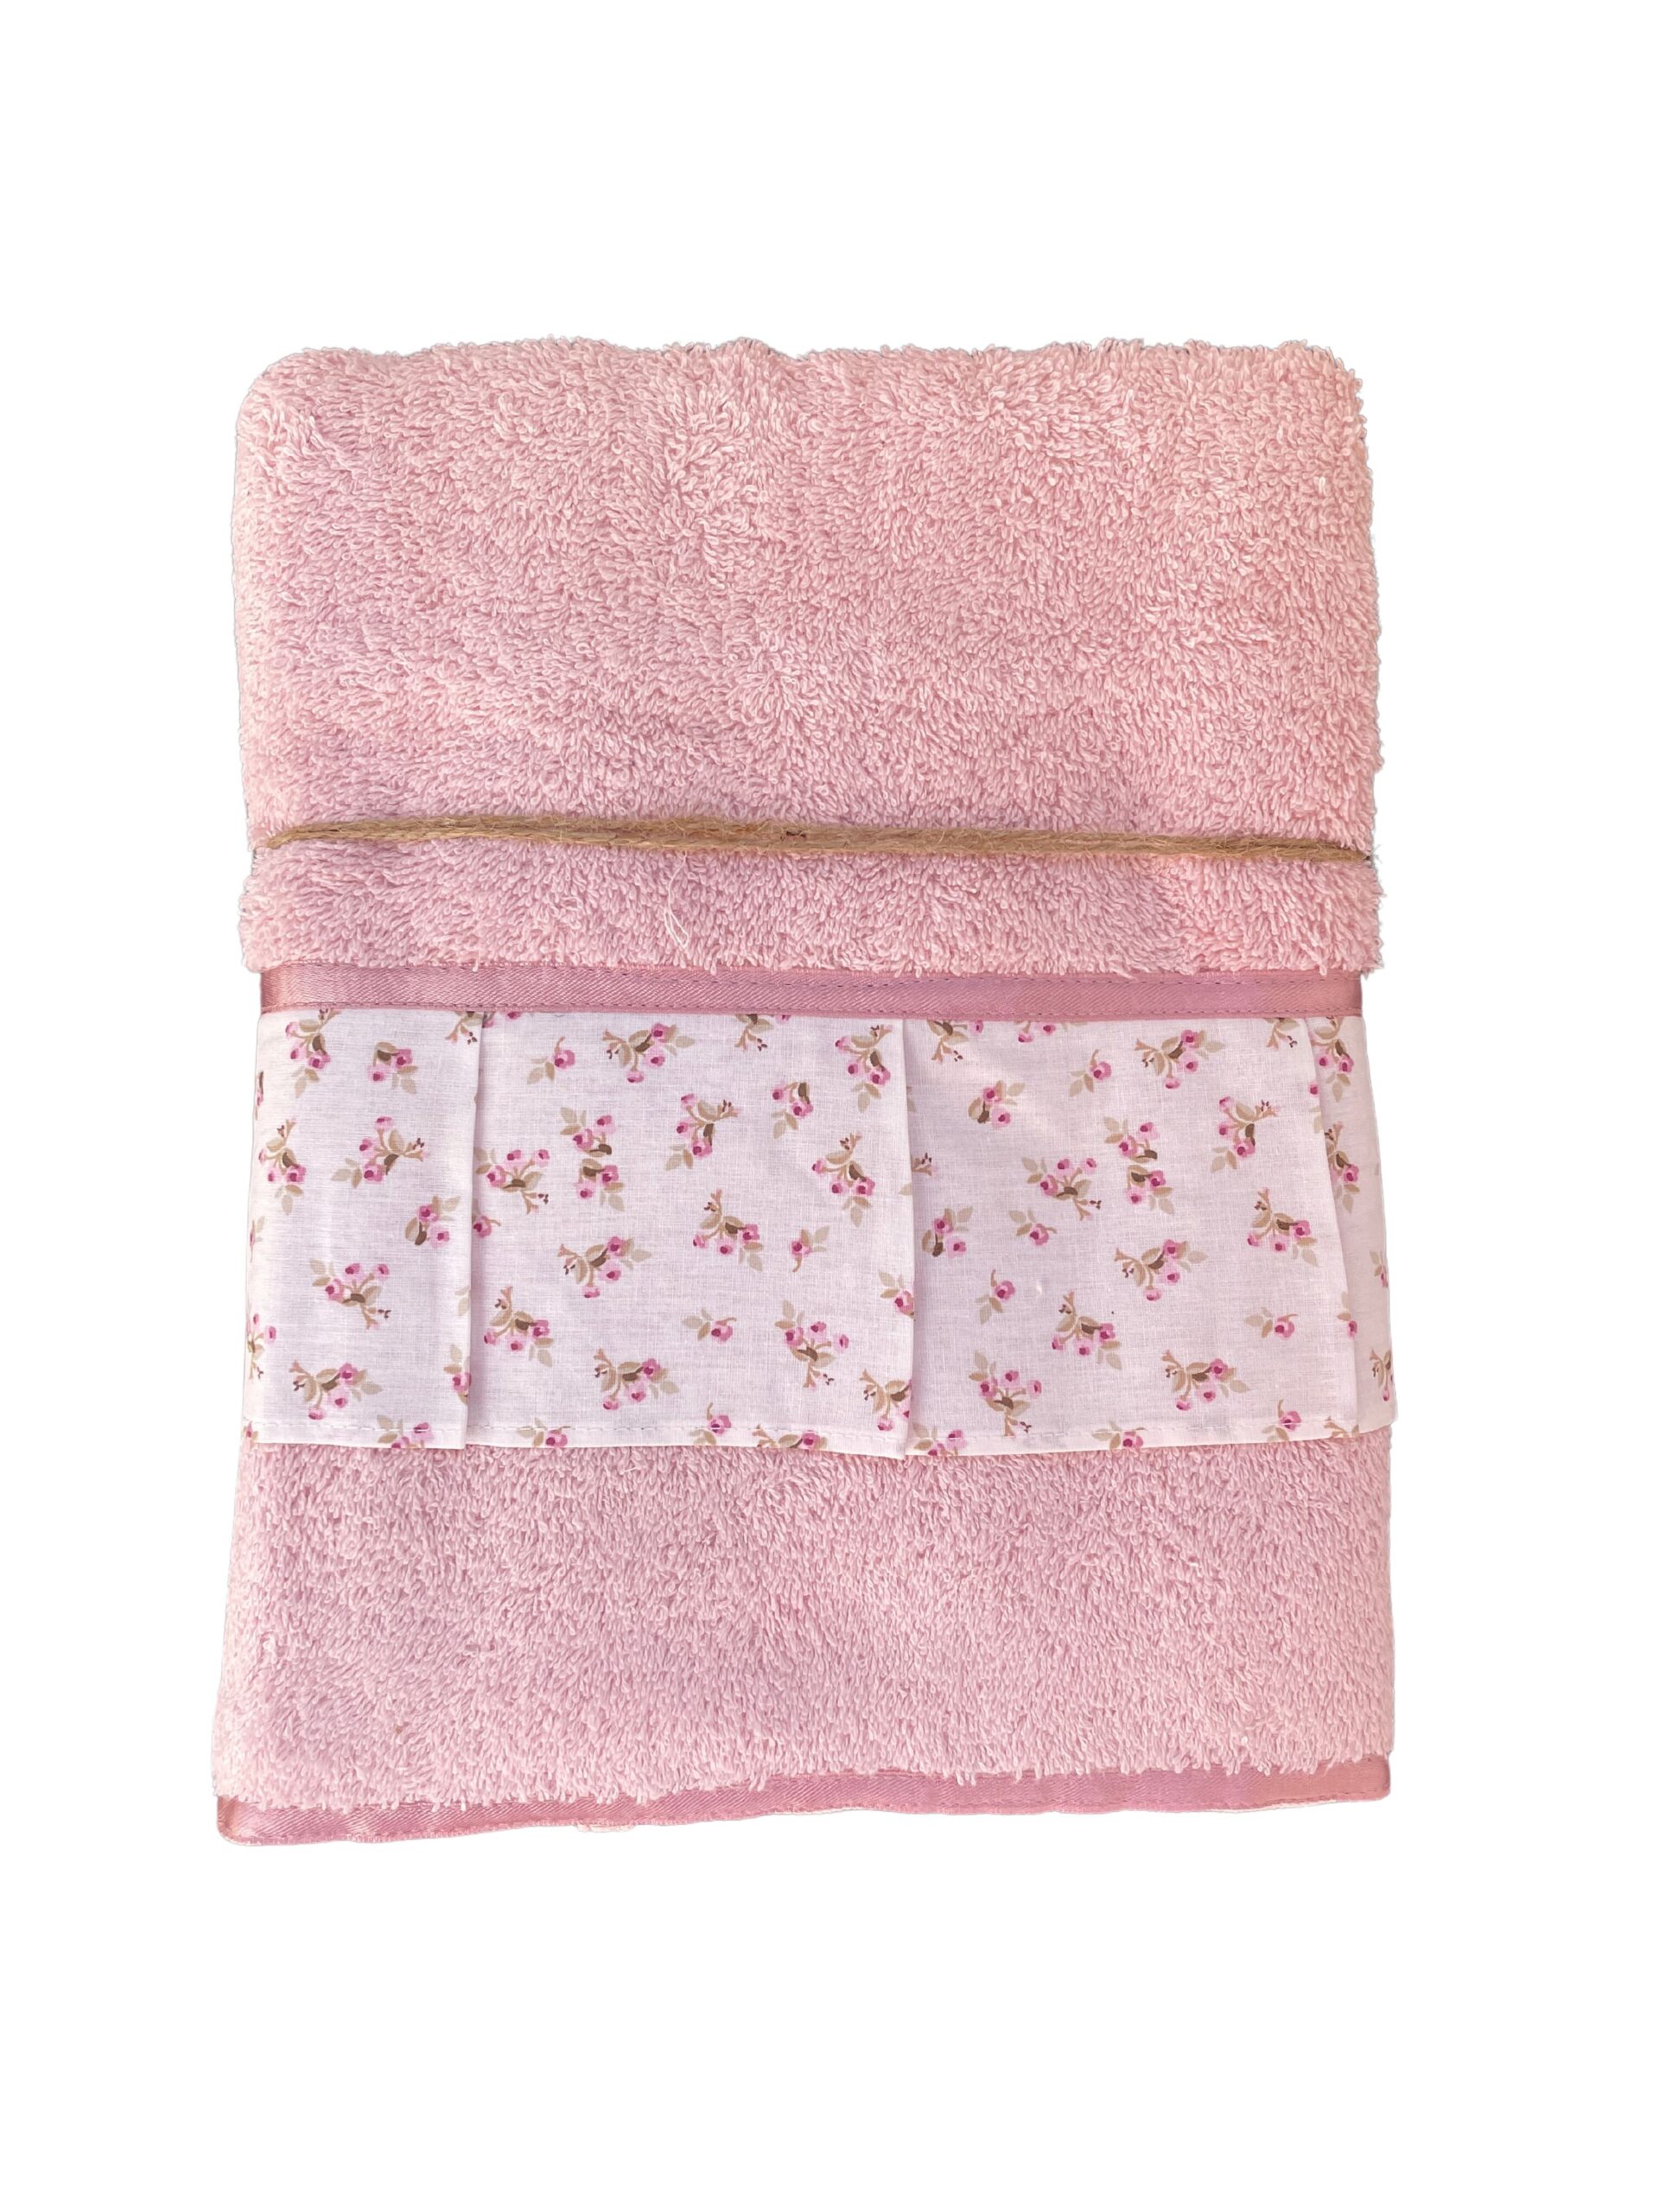 Coppia asciugamani lavinia rosa